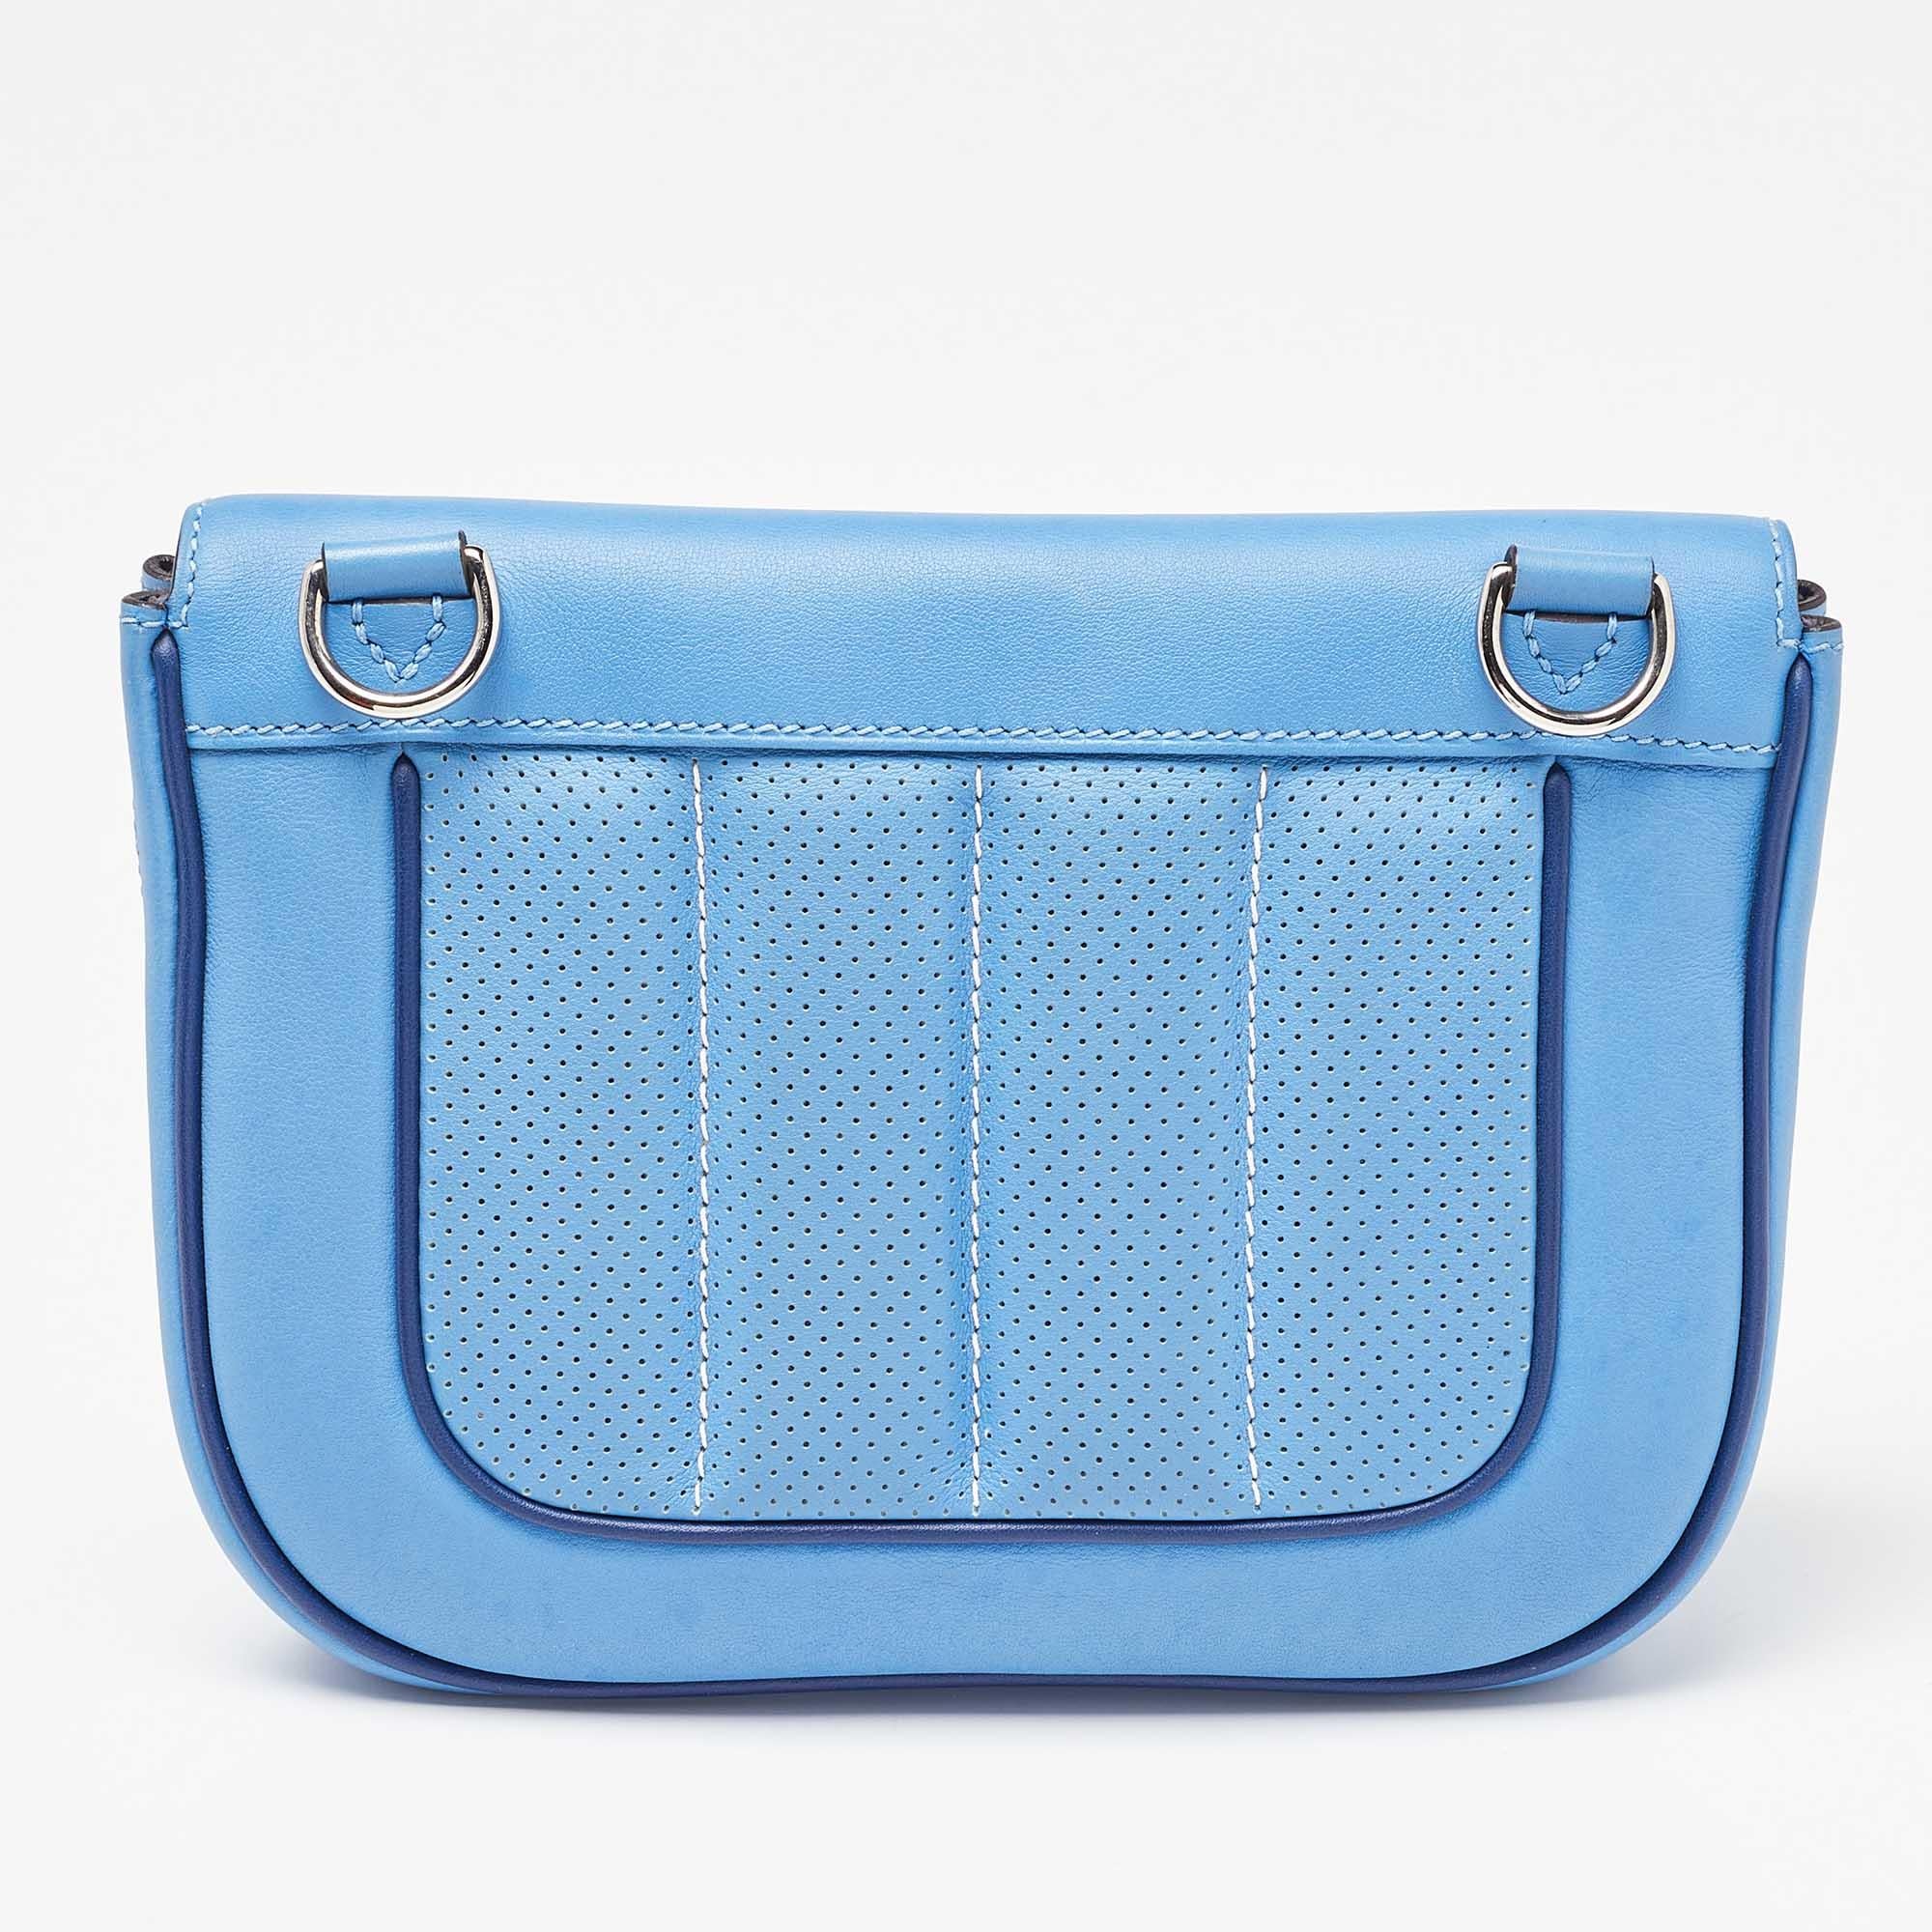 Blue Hermes Bleu Paradis/Saphir Swift Leather Palladium Hardware Mini Berline Bag